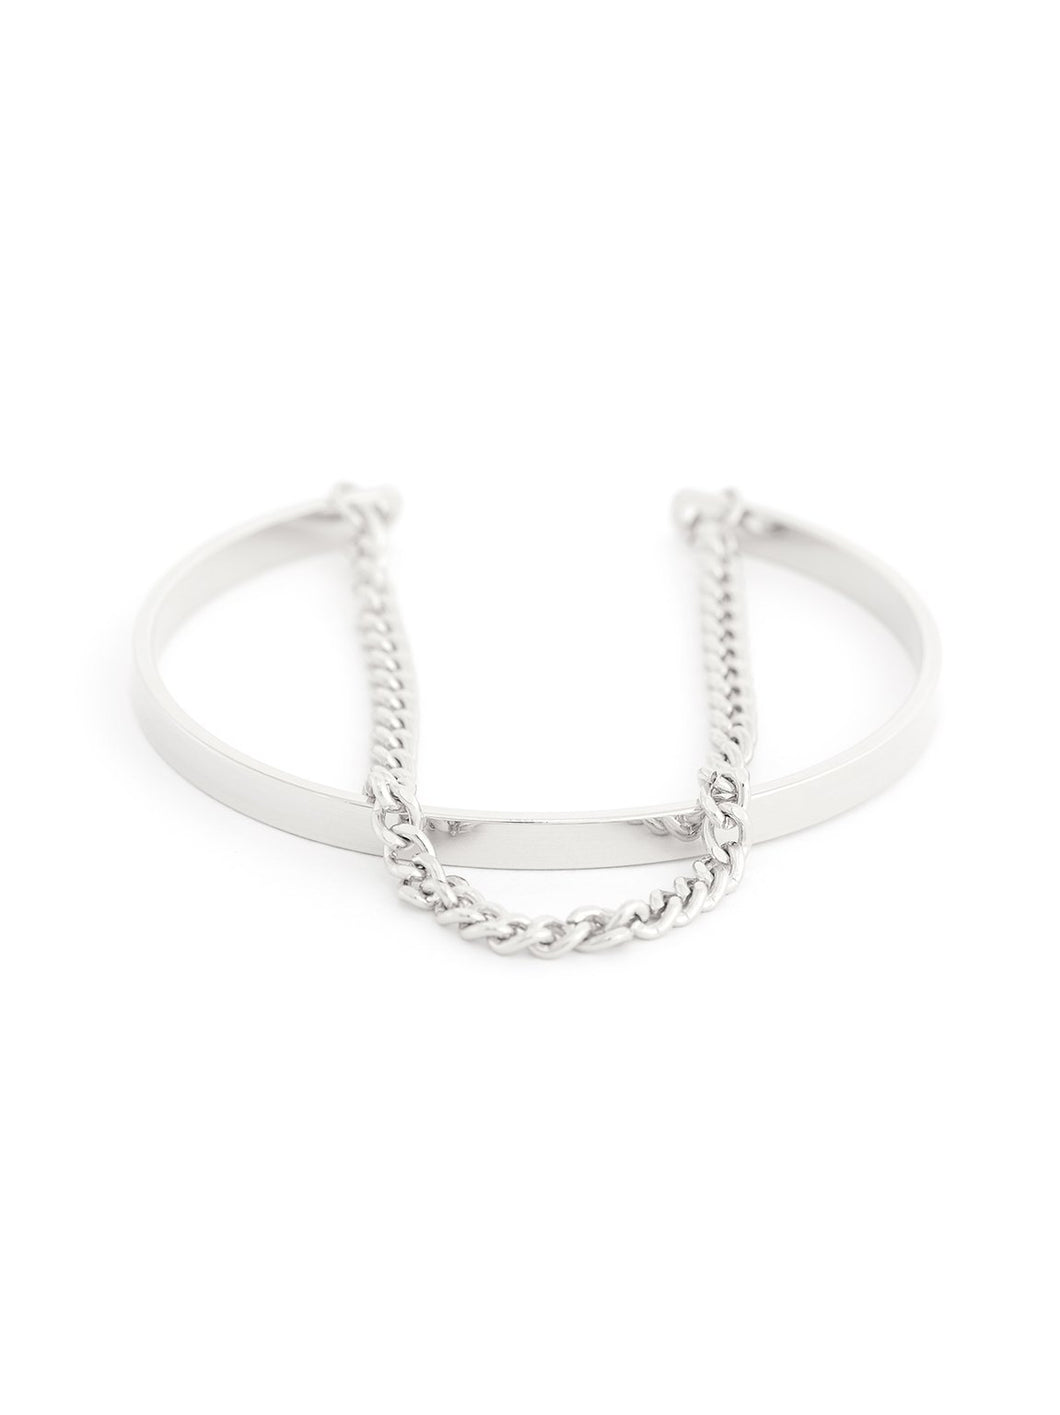 Metal Chain Linked Bracelet - Rhodium